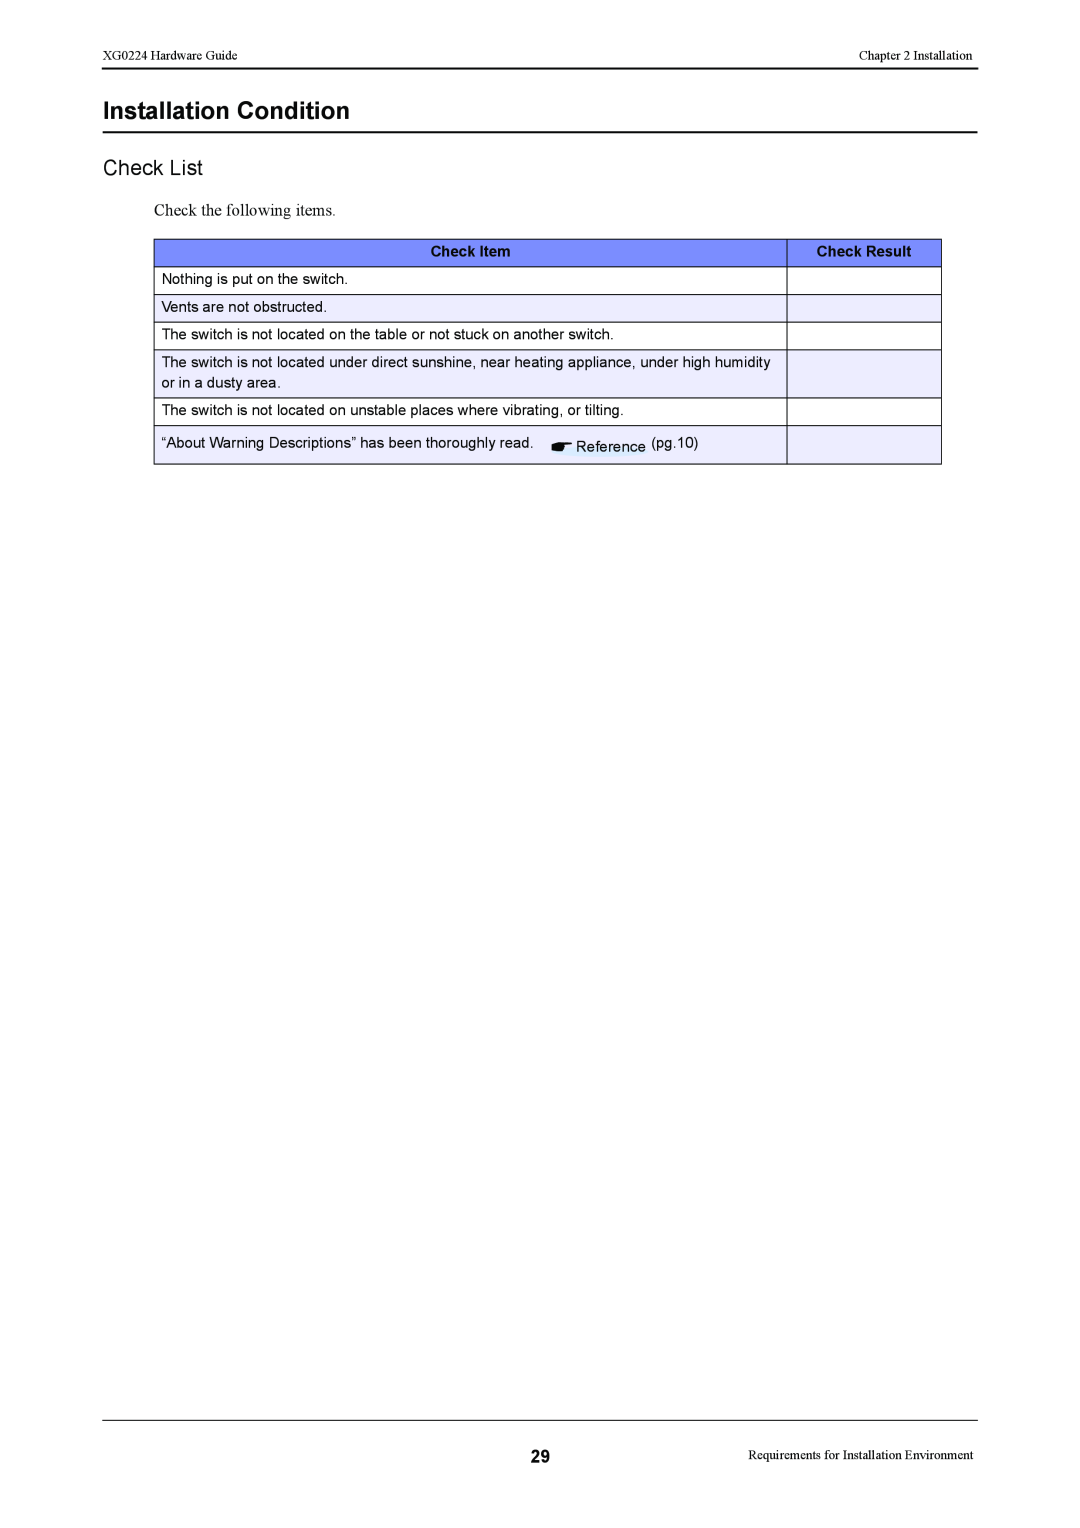 Fujitsu XG0224 manual Installation Condition, Check List, Check Item, Check Result 